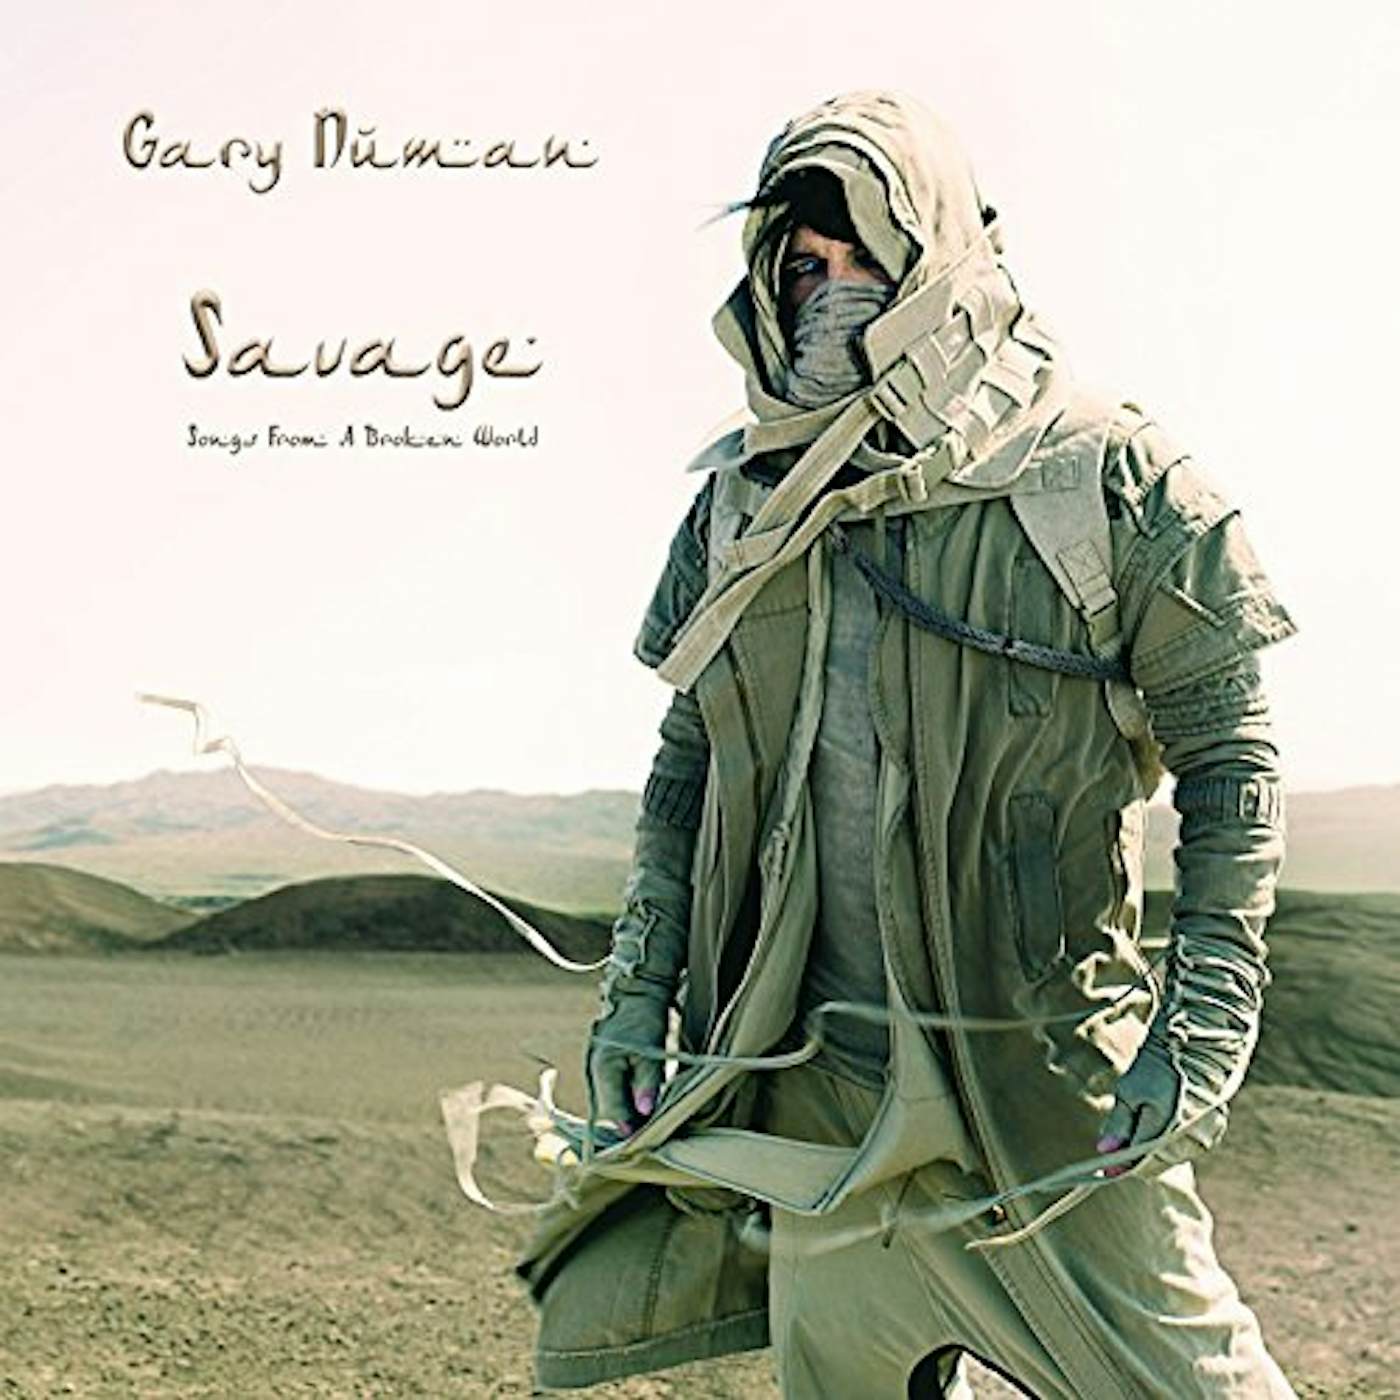 Gary Numan Savage (Songs from a Broken World) Vinyl Record